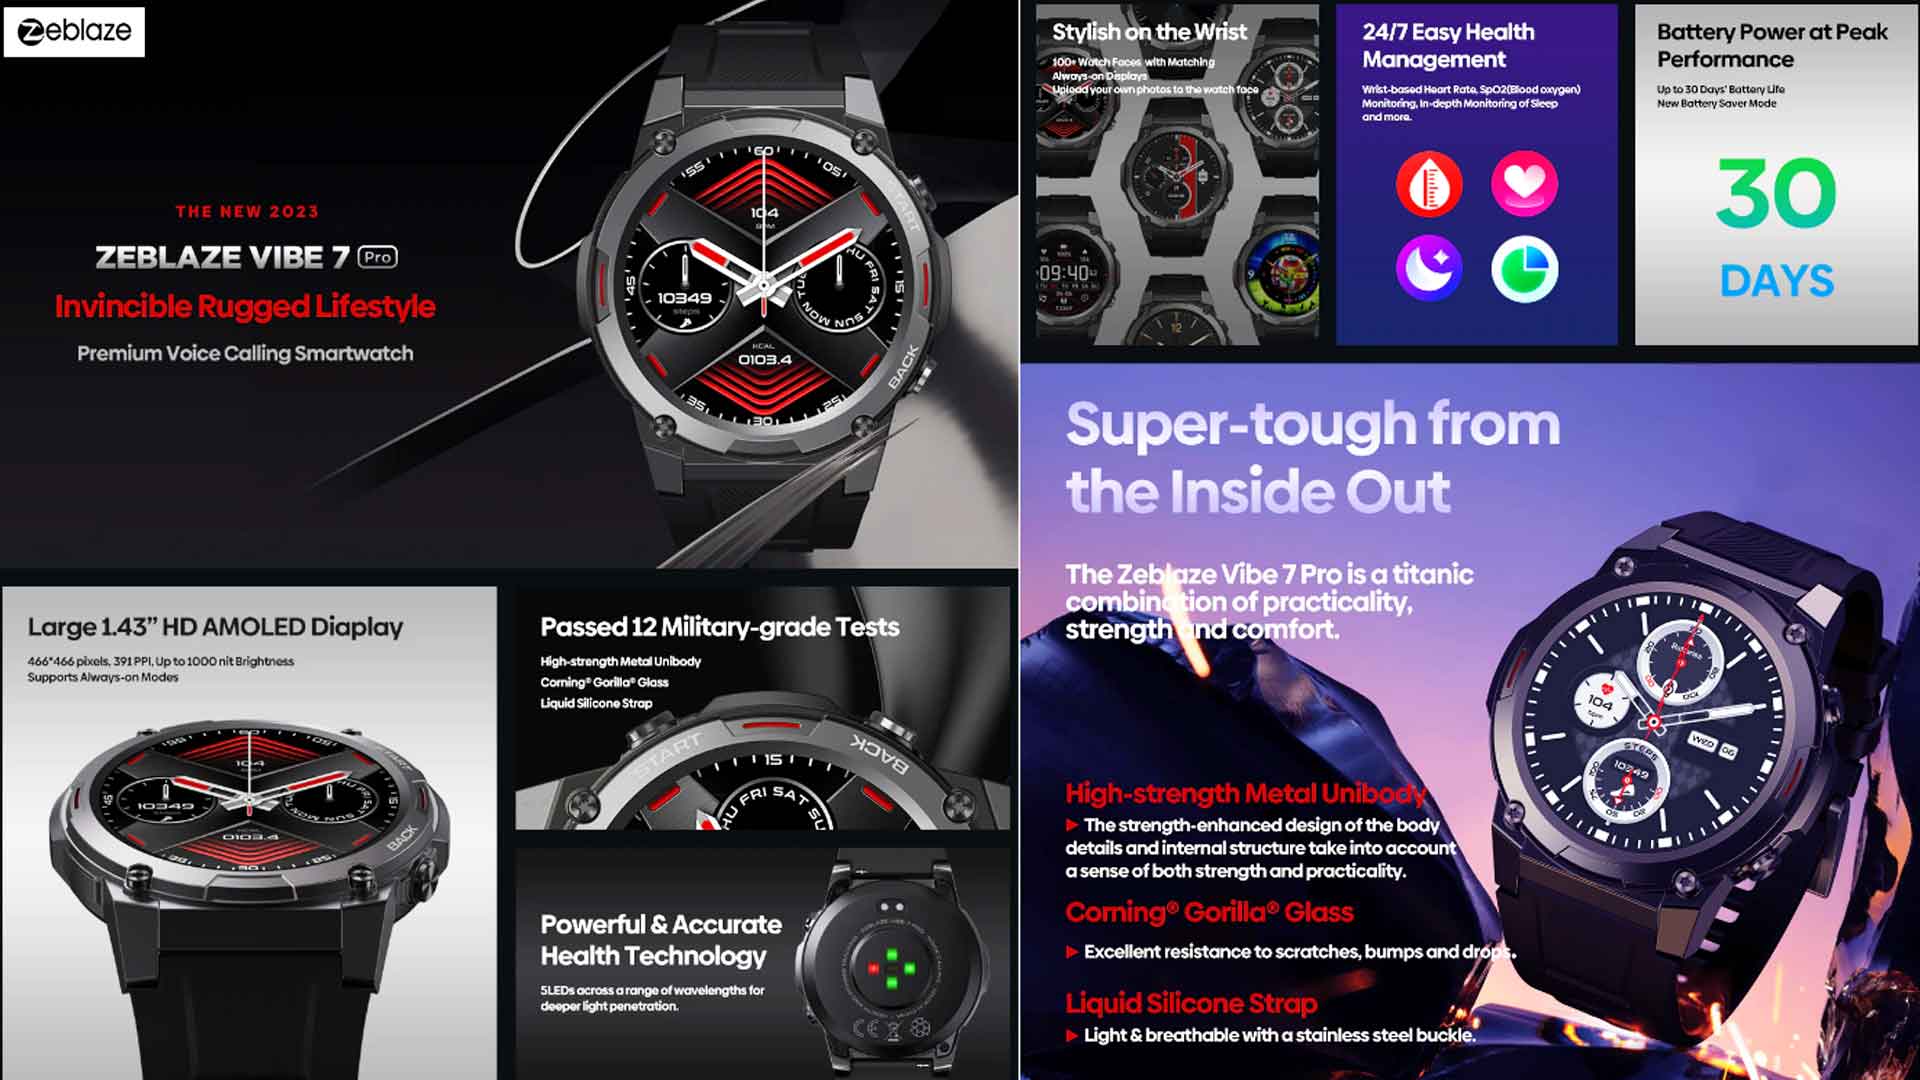 Zeblaze Vibe 7 Pro, Zeblaze, smart watch, smartwatch, Zeblaze smartwatch, wearable technology, fitness tracker, fitness smartwatch, smart watch with calling, rugged smartwatch